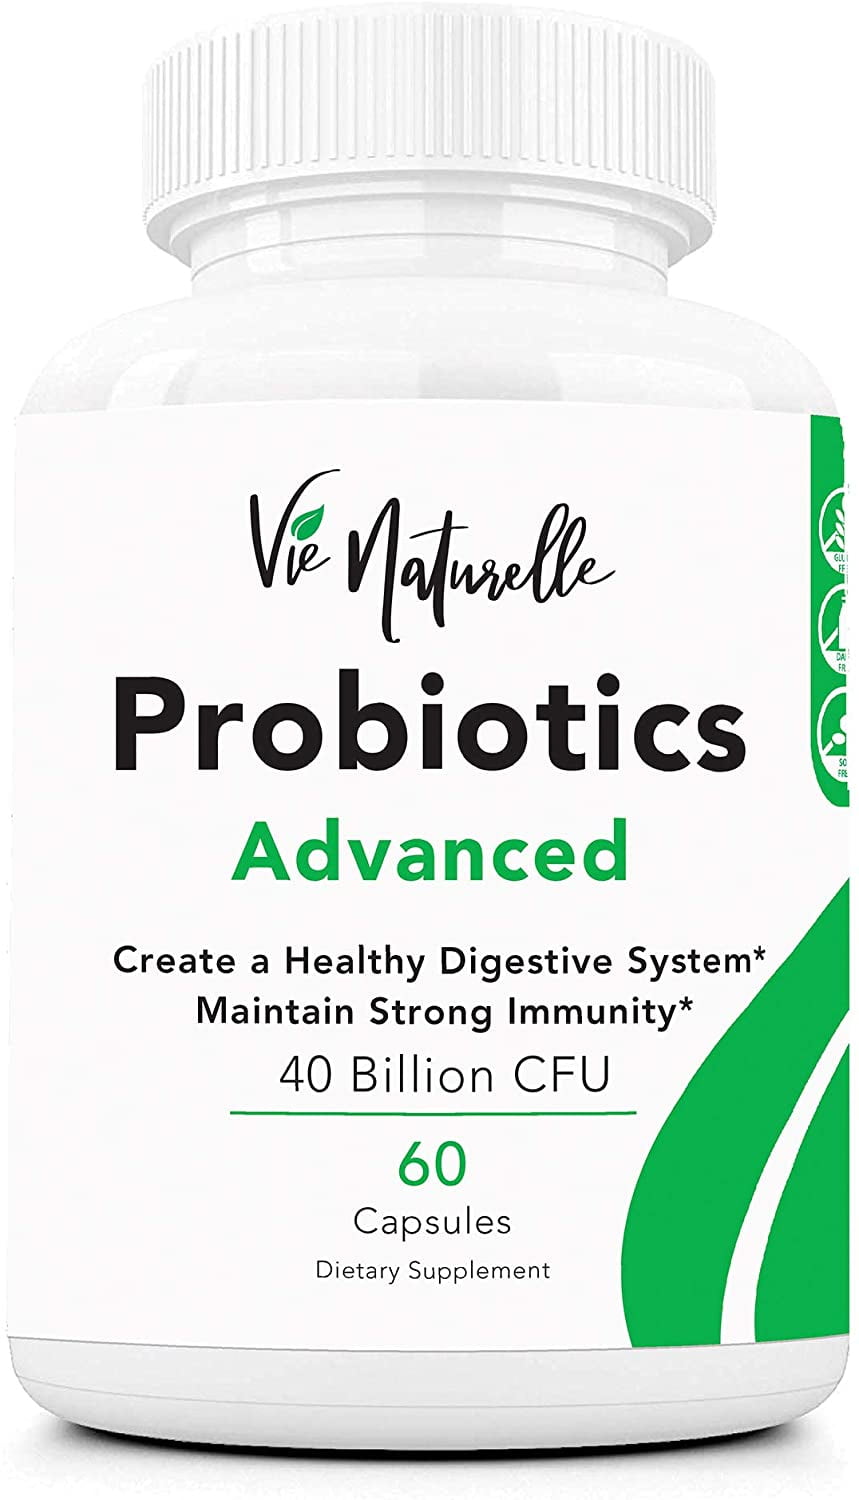 Vie Naturelle Advanced Probiotics Supplement (60 Capsules) - 40 Billion CFU Digestive Support